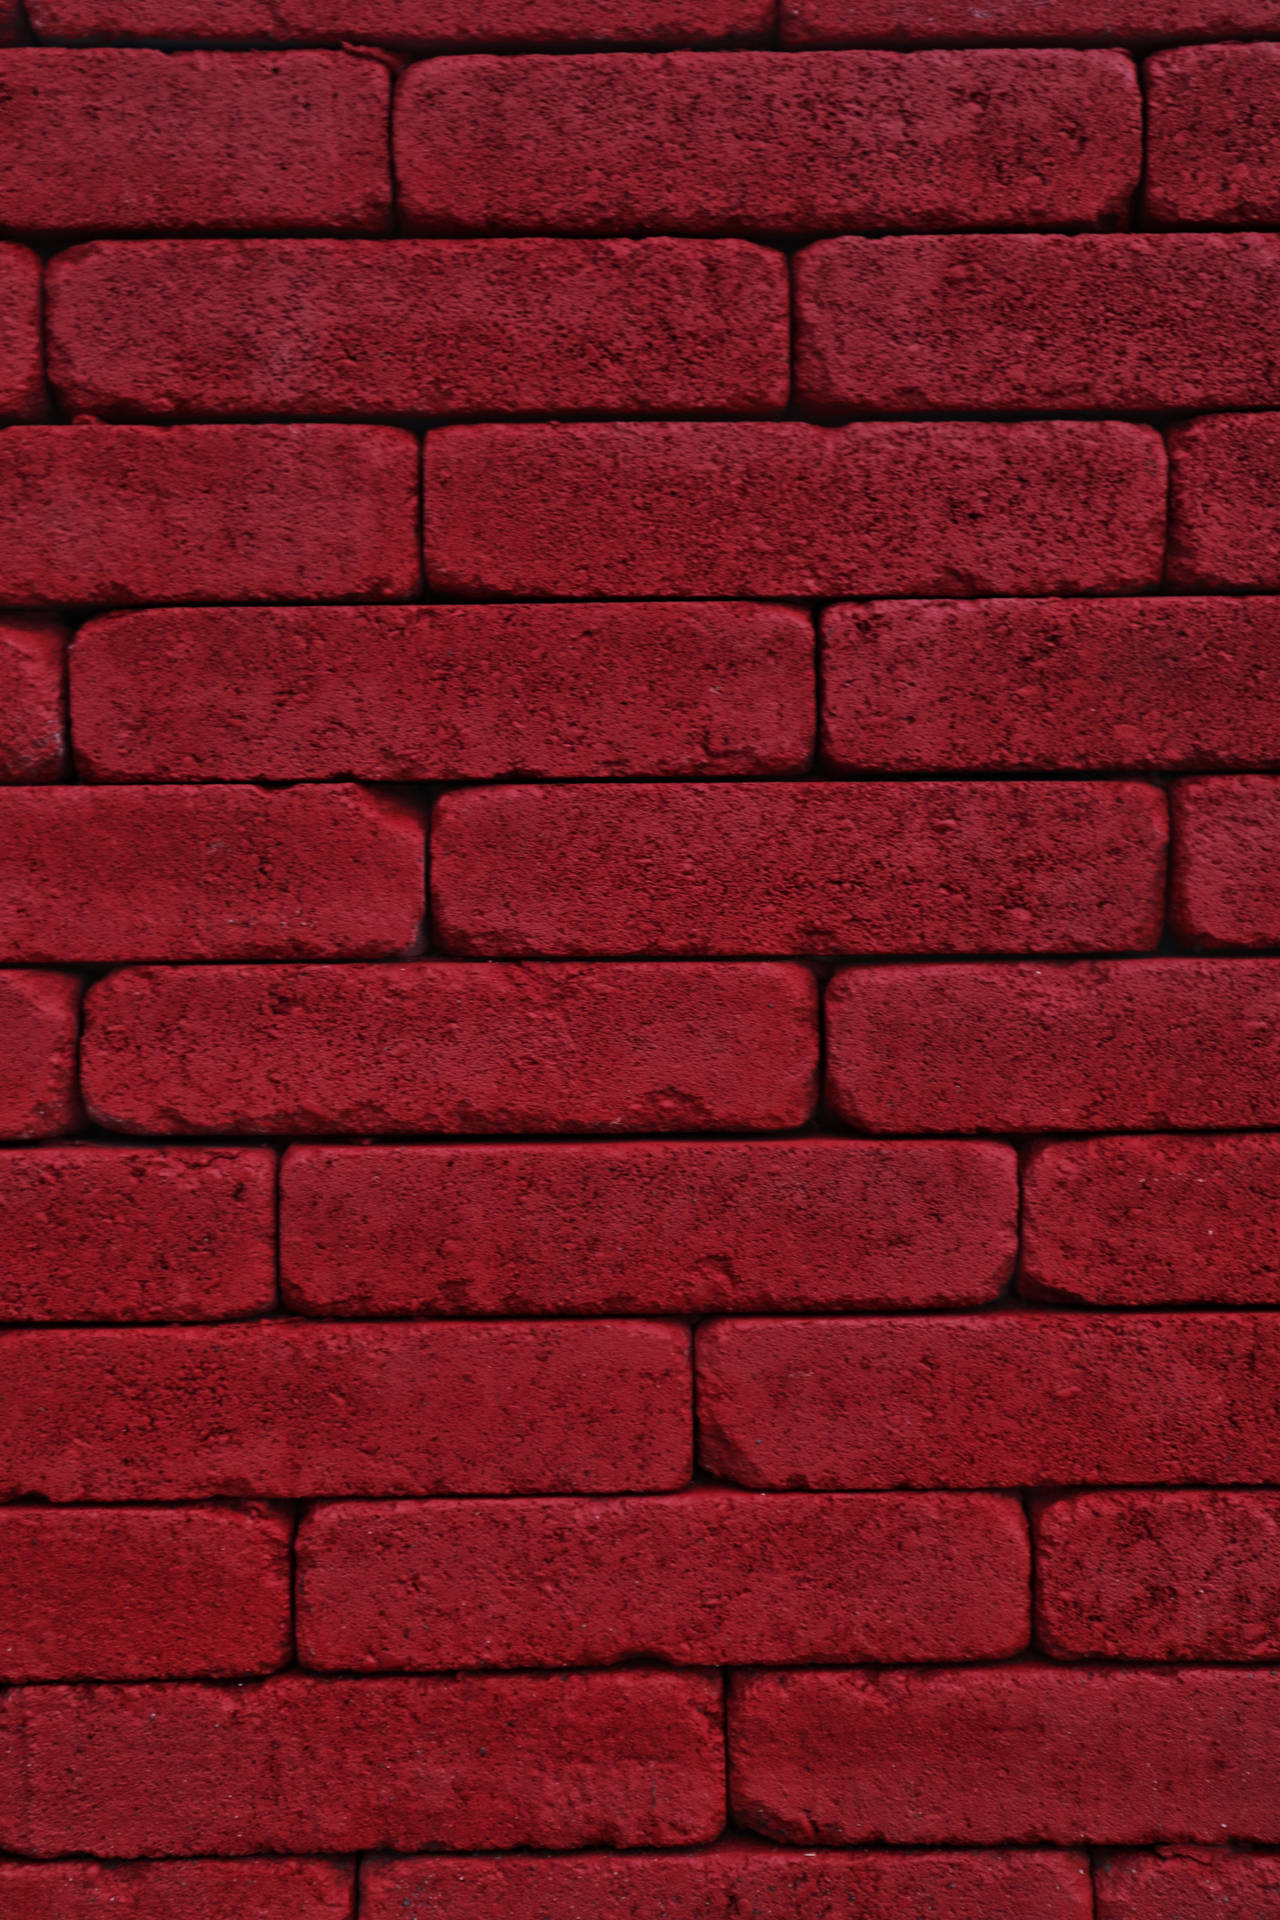 Minecraft Chiseled Stone Bricks Wallpaper